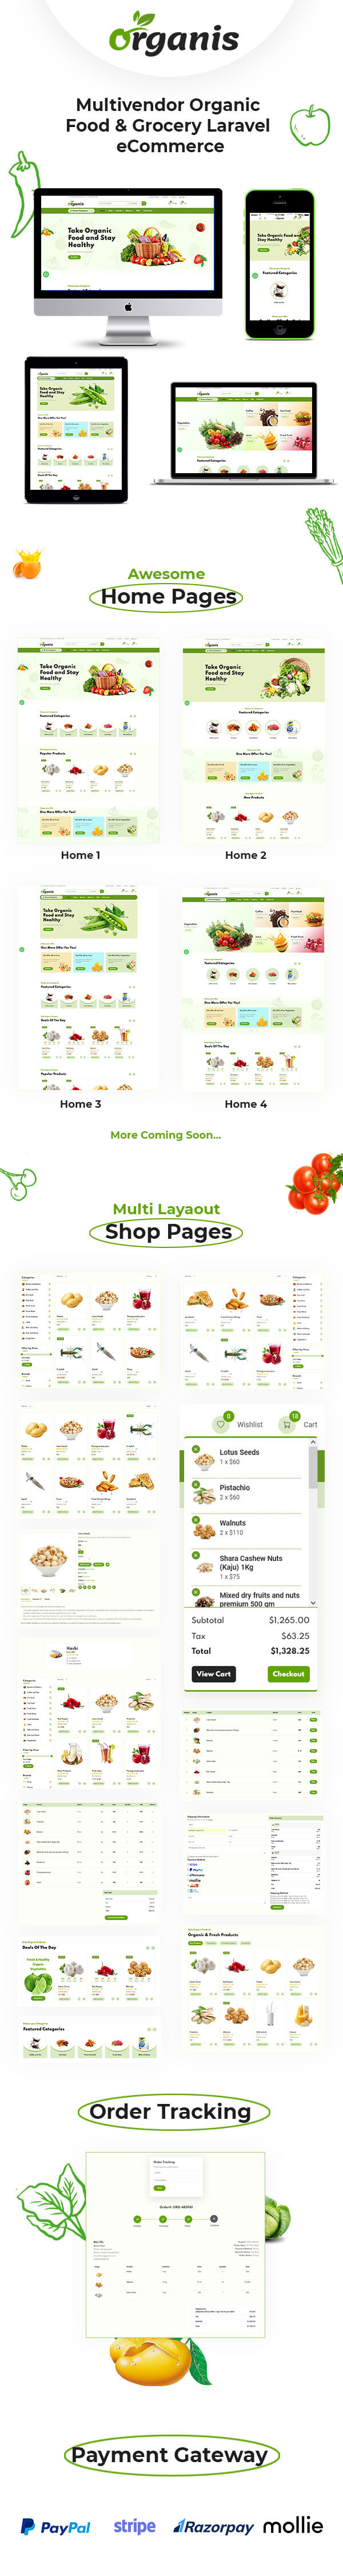 Organis - Multivendor Organic Food & Grocery Laravel eCommerce - 2